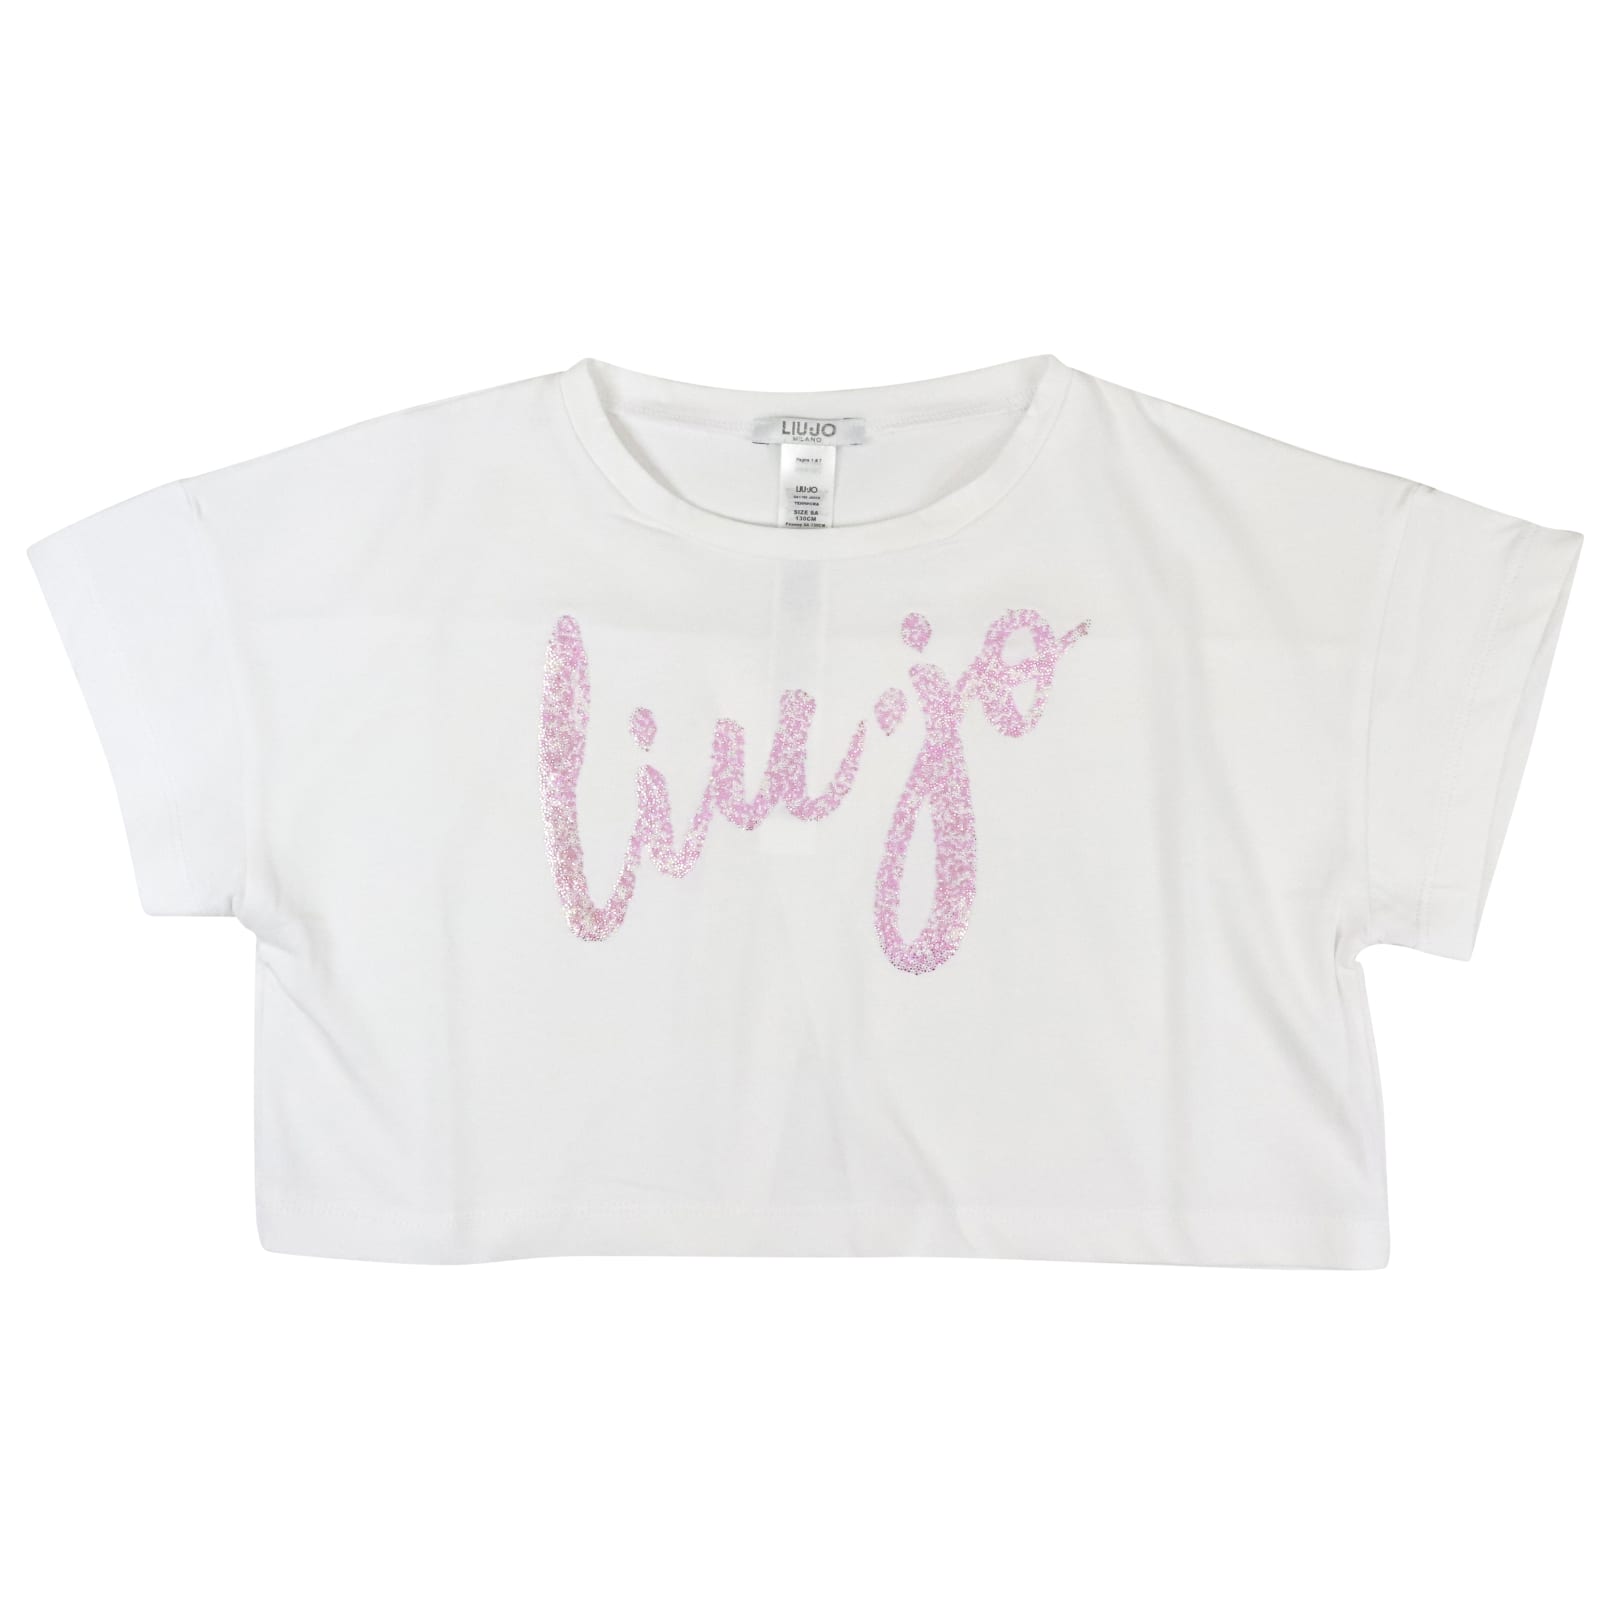 Liu •jo Kids' Cotton T-shirt In White / Pink